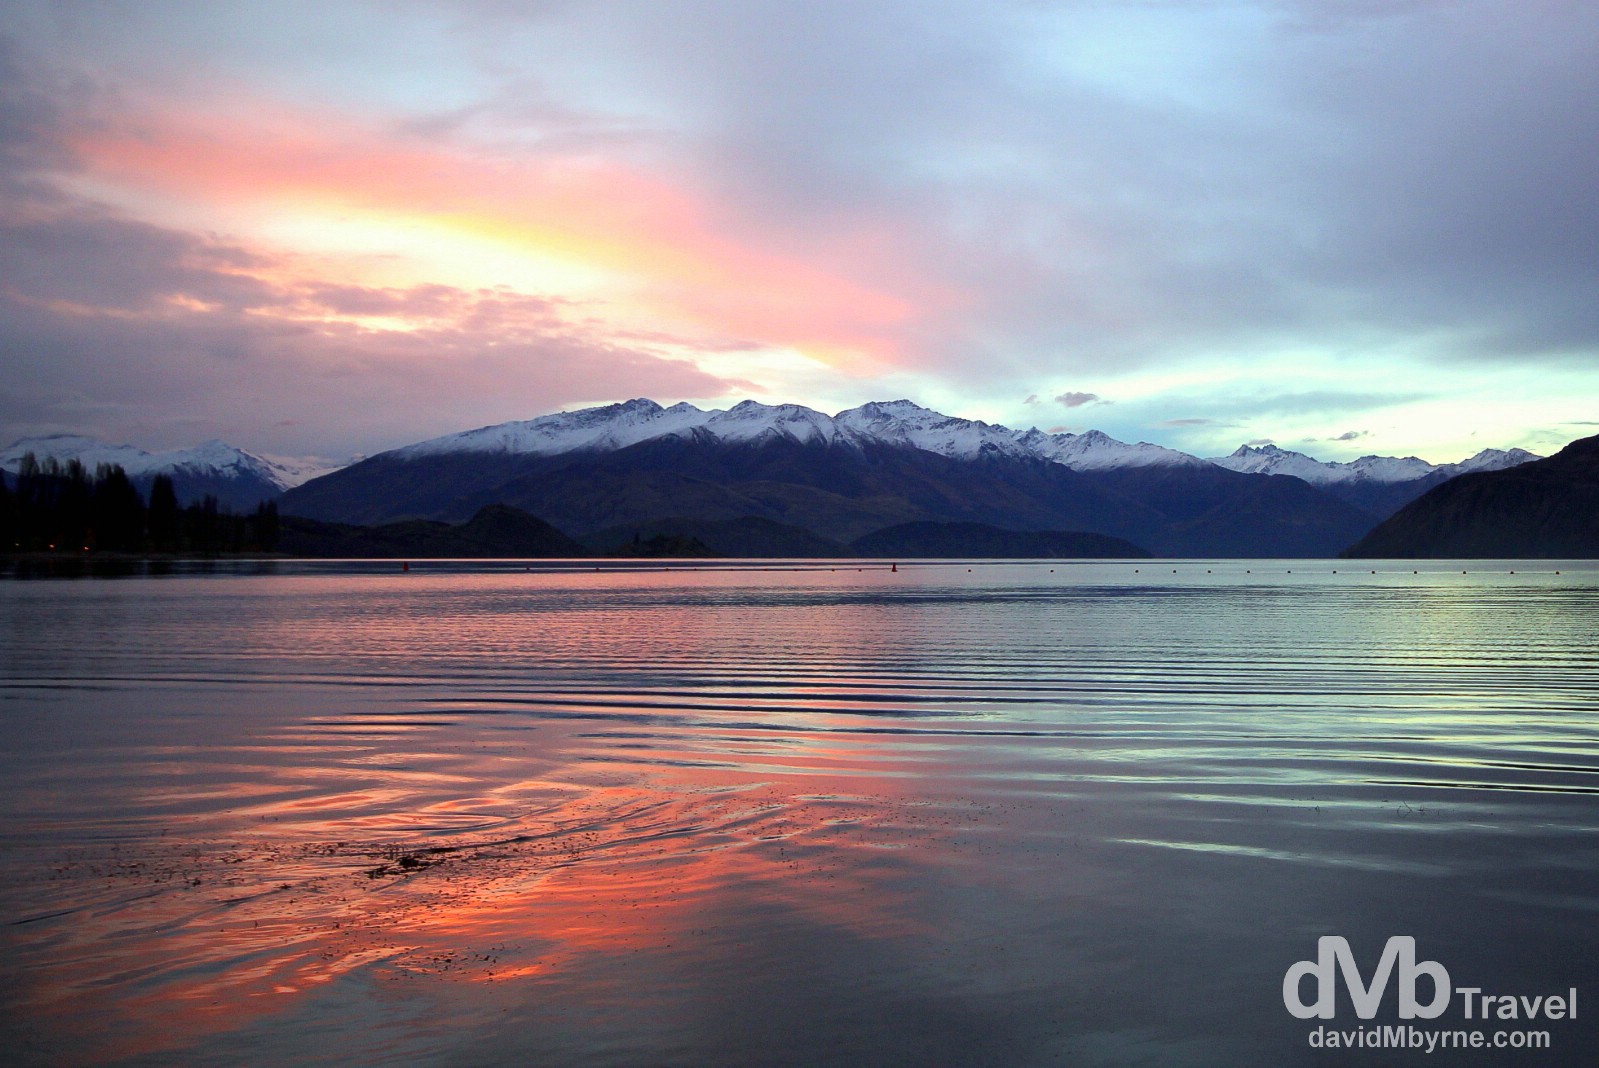 Fading sunset as seen from the shores of Lake Wanaka, Wanaka, South Island, New Zealand. May 20th 2012.